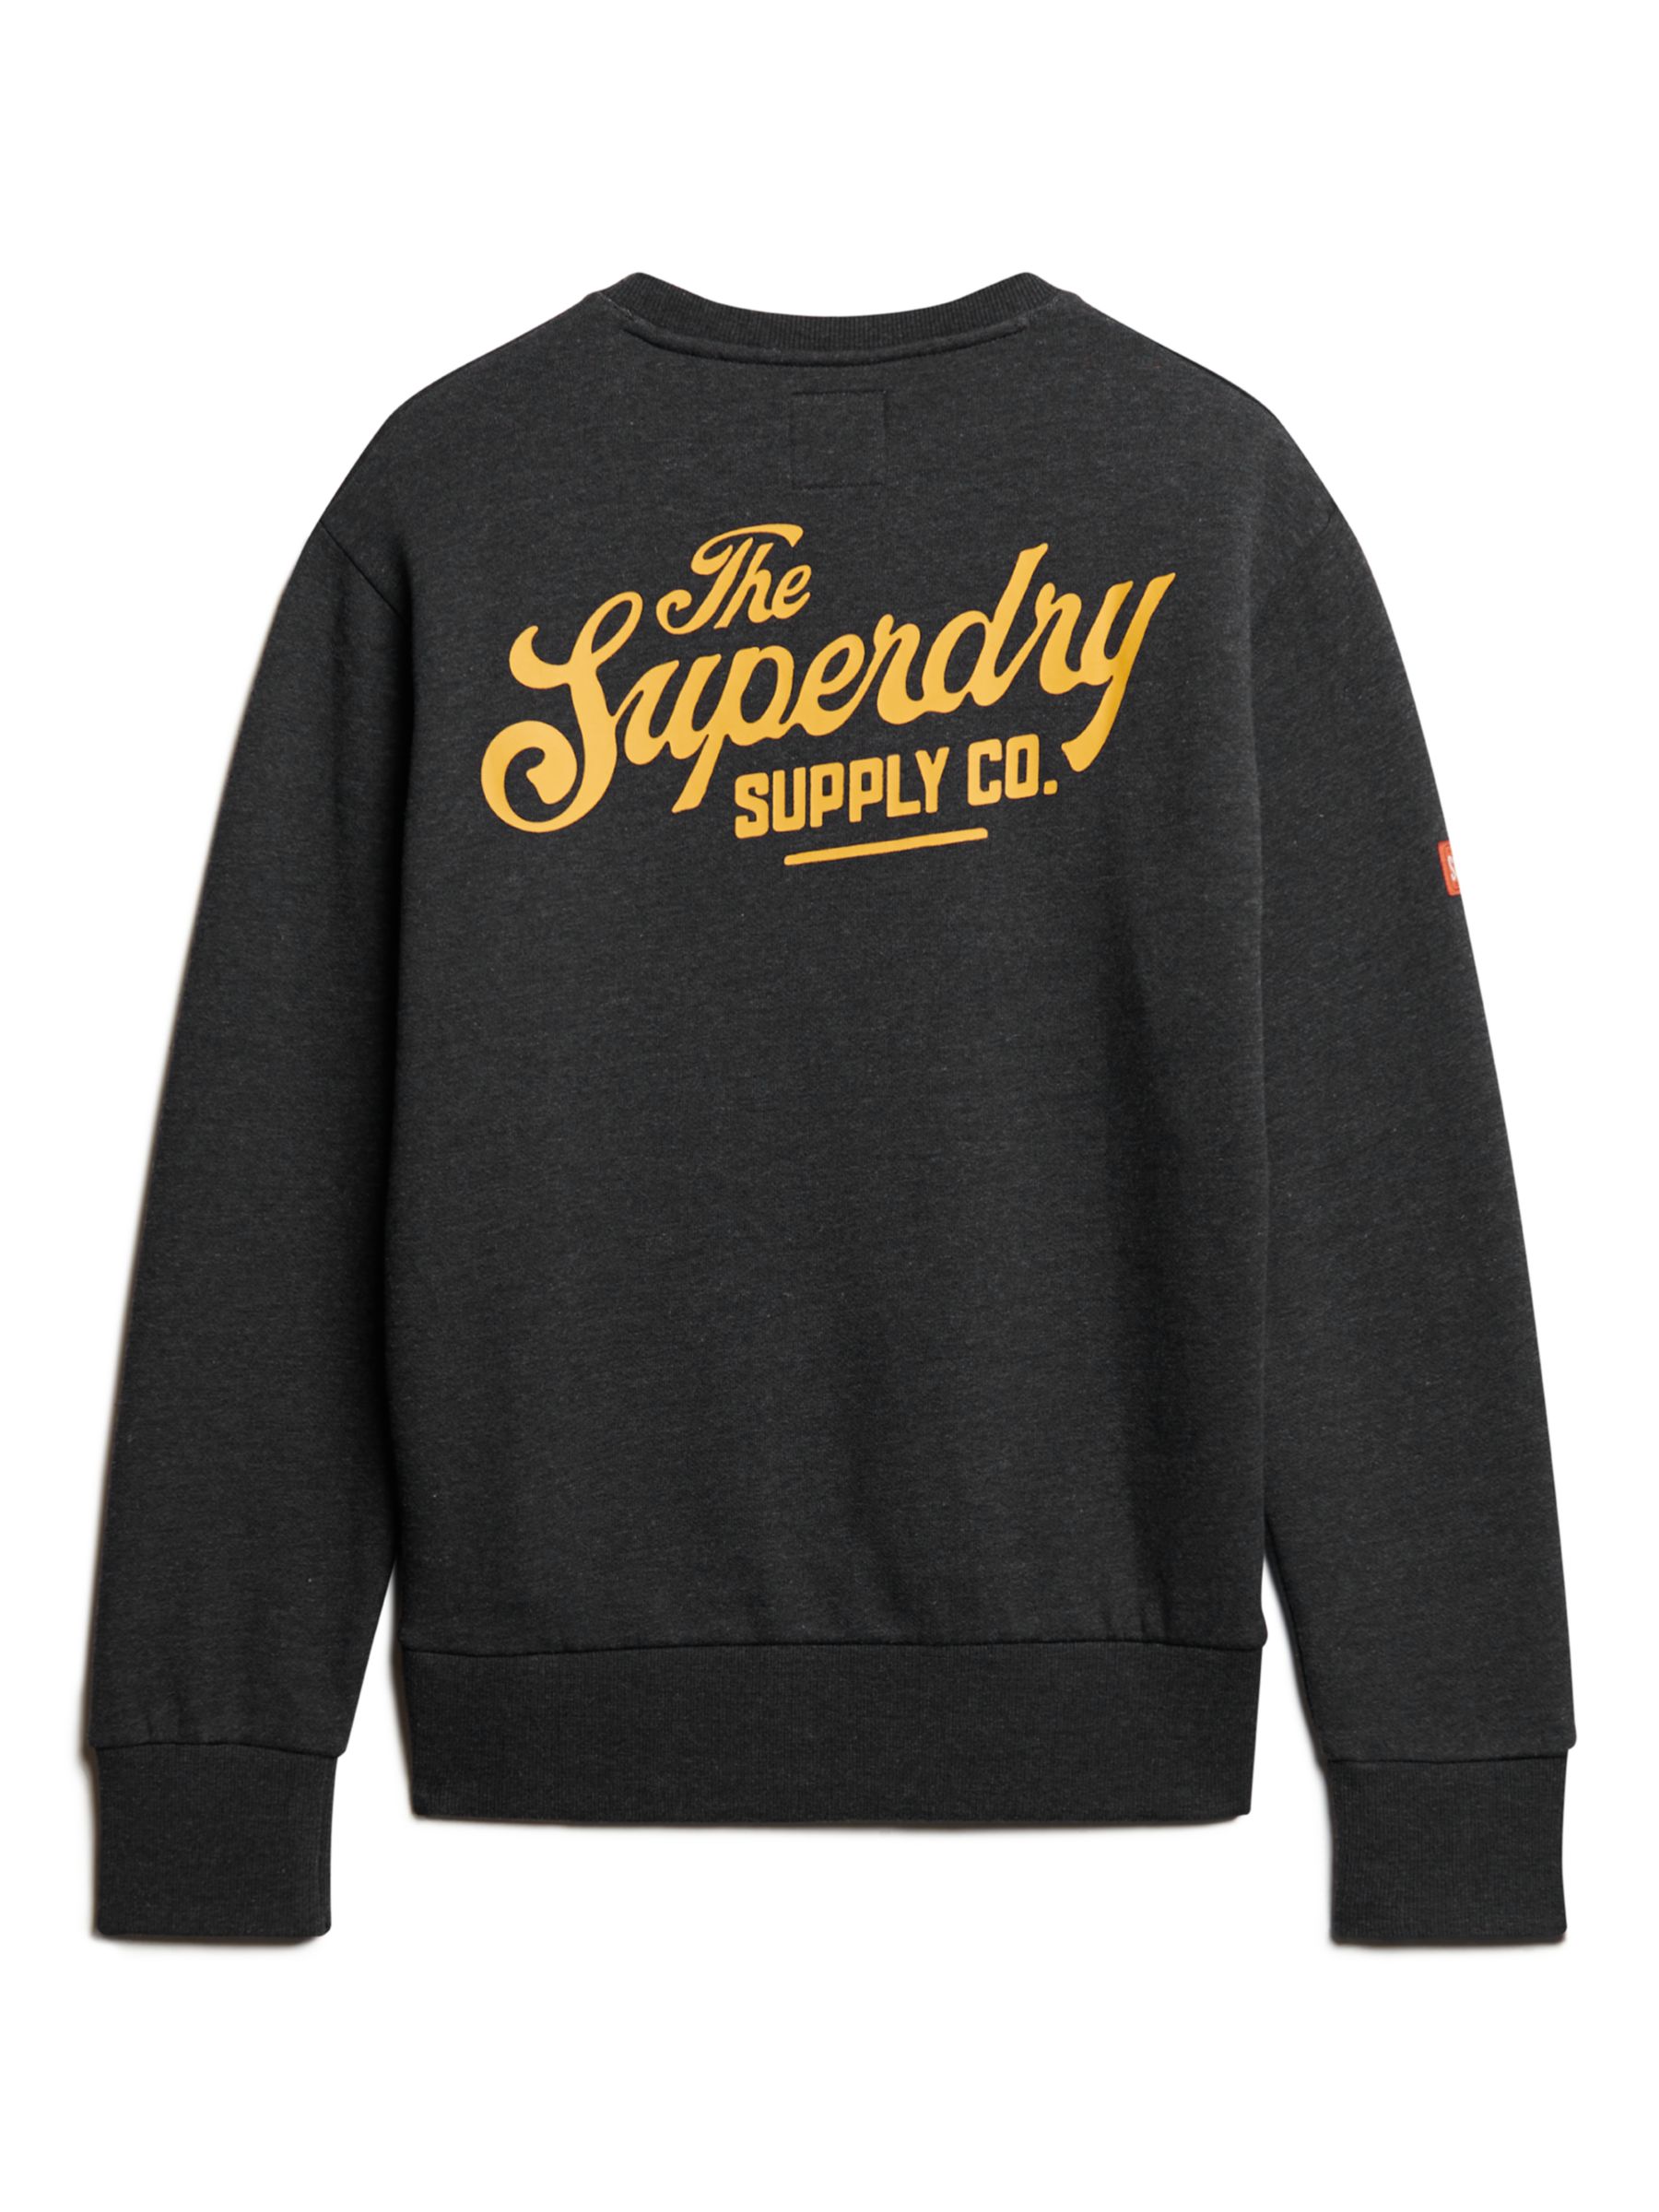 Superdry Workwear Trade Jumper, Black/Multi, S